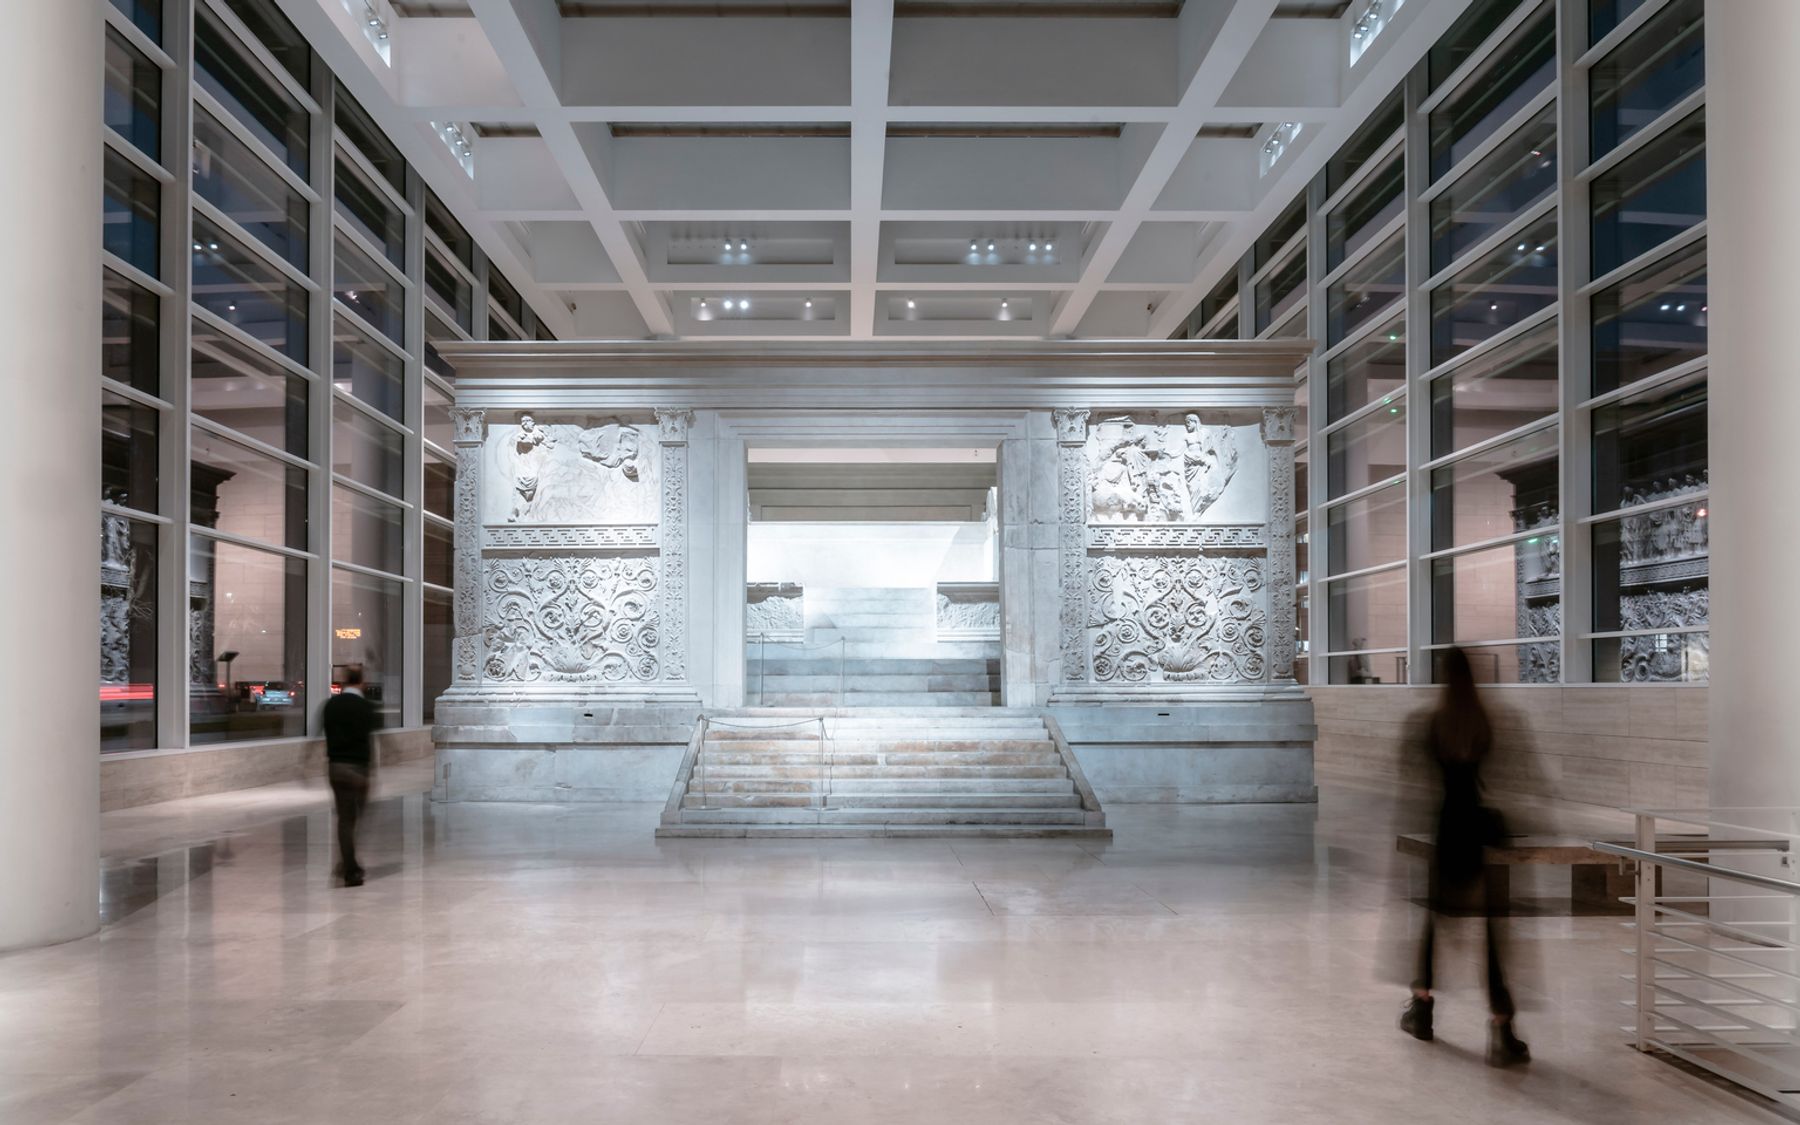 Ara Pacis, Rome Architecture: Richard Meier & Partners, New York / USA. Lighting design: Fisher Marantz Stone, New York. Photography: Marcela Schneider Ferreira, Florence.